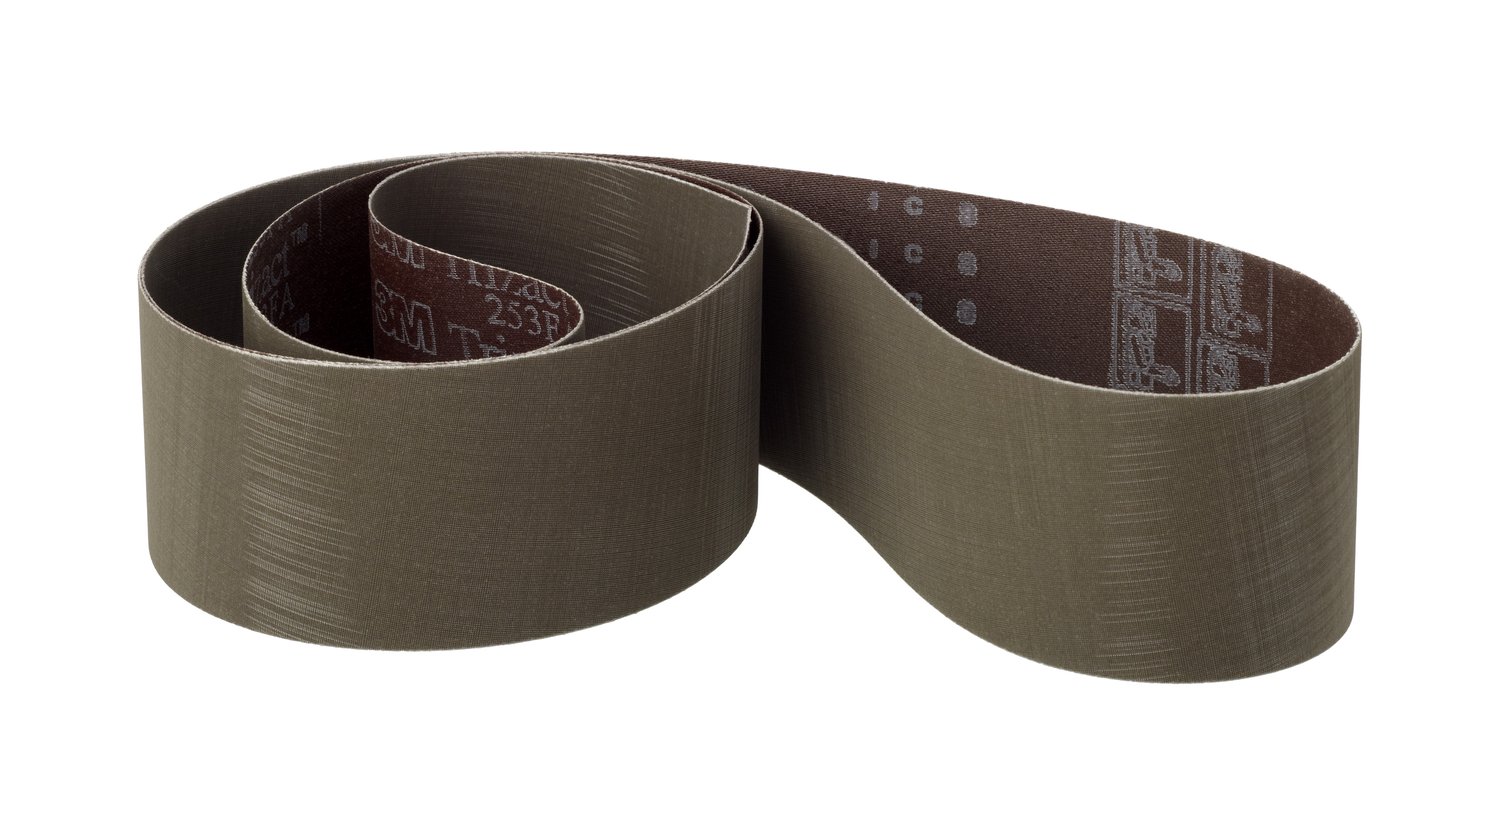 7010514604 - 3M Trizact Cloth Belt 253FA, A45 XF-weight, 1 in x 168 in, Film-lok,
Full-flex